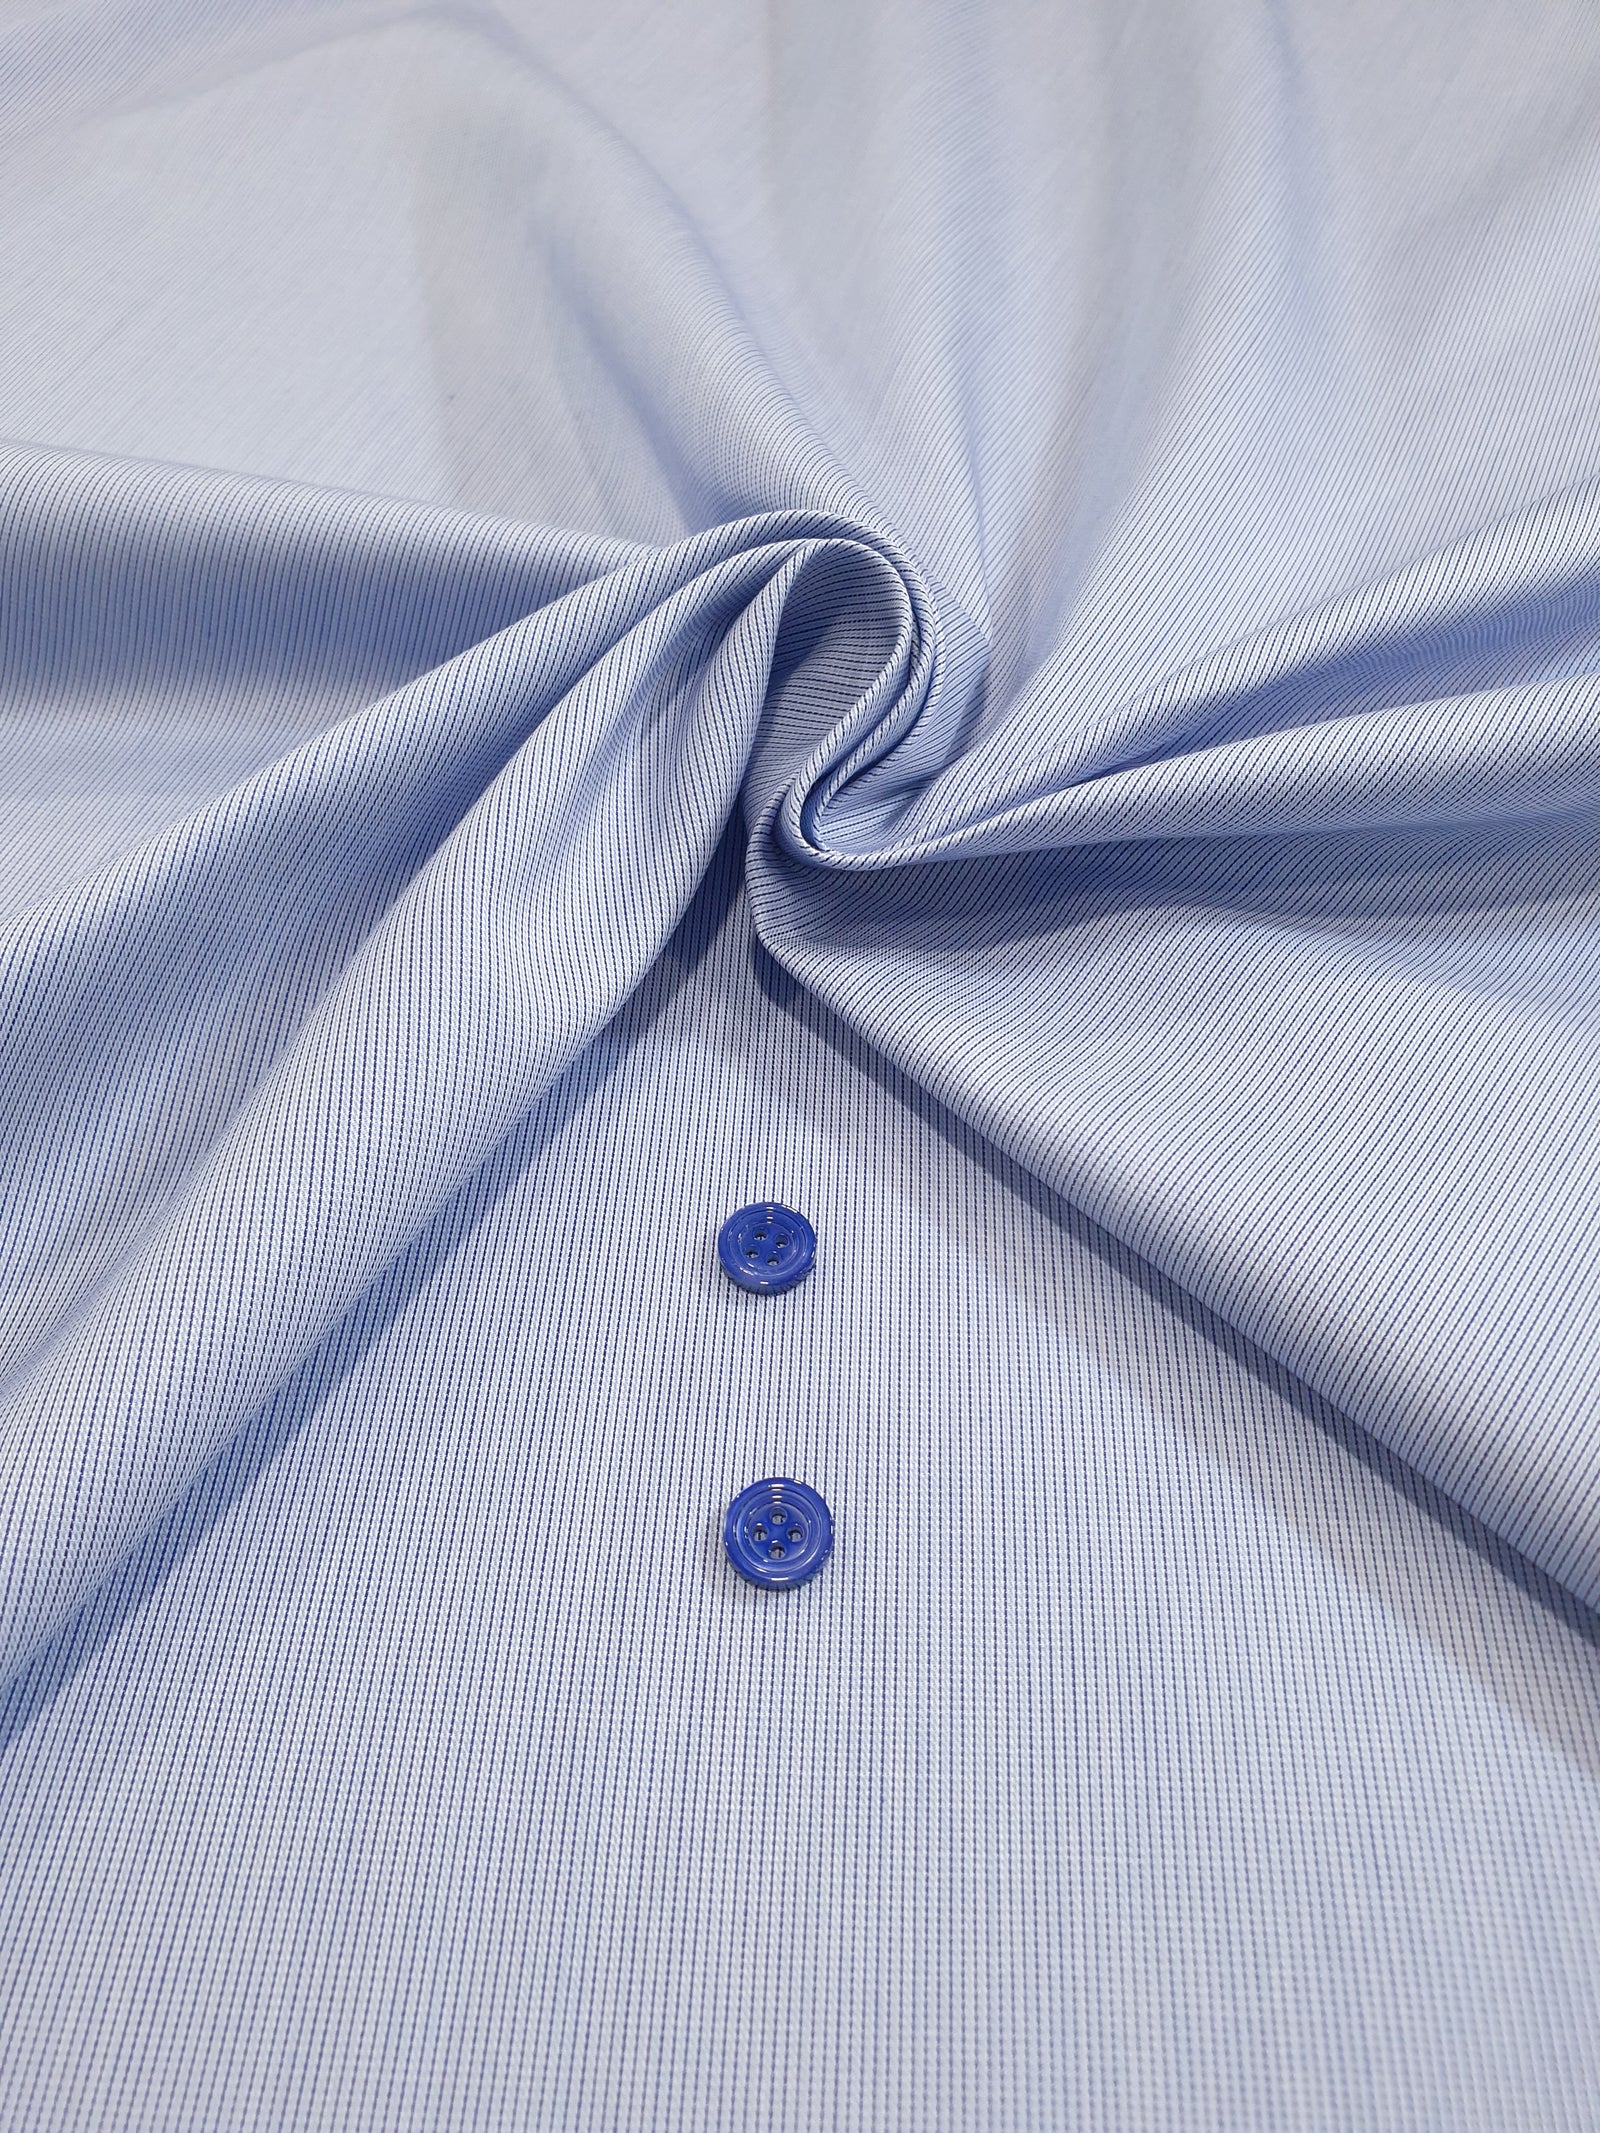 959.308 Blue Fine Weave Pin Stripes